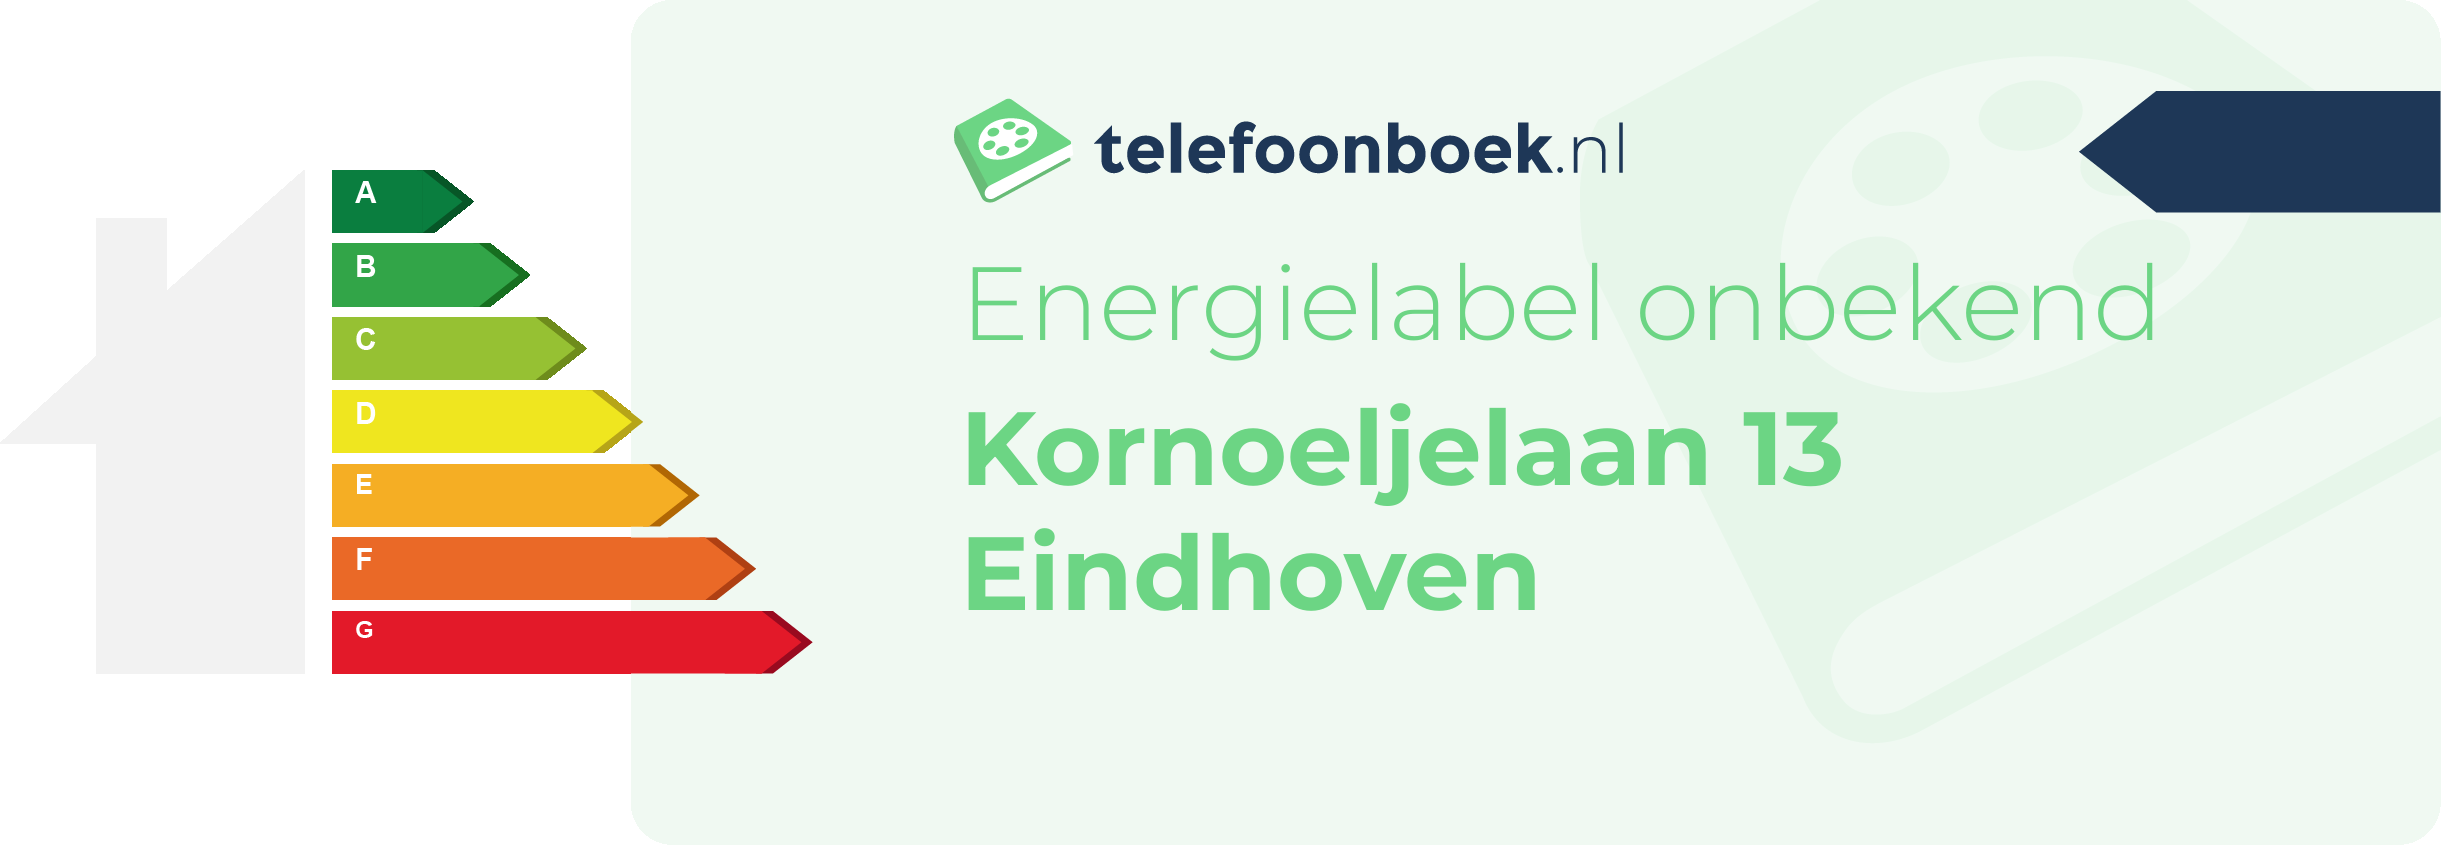 Energielabel Kornoeljelaan 13 Eindhoven